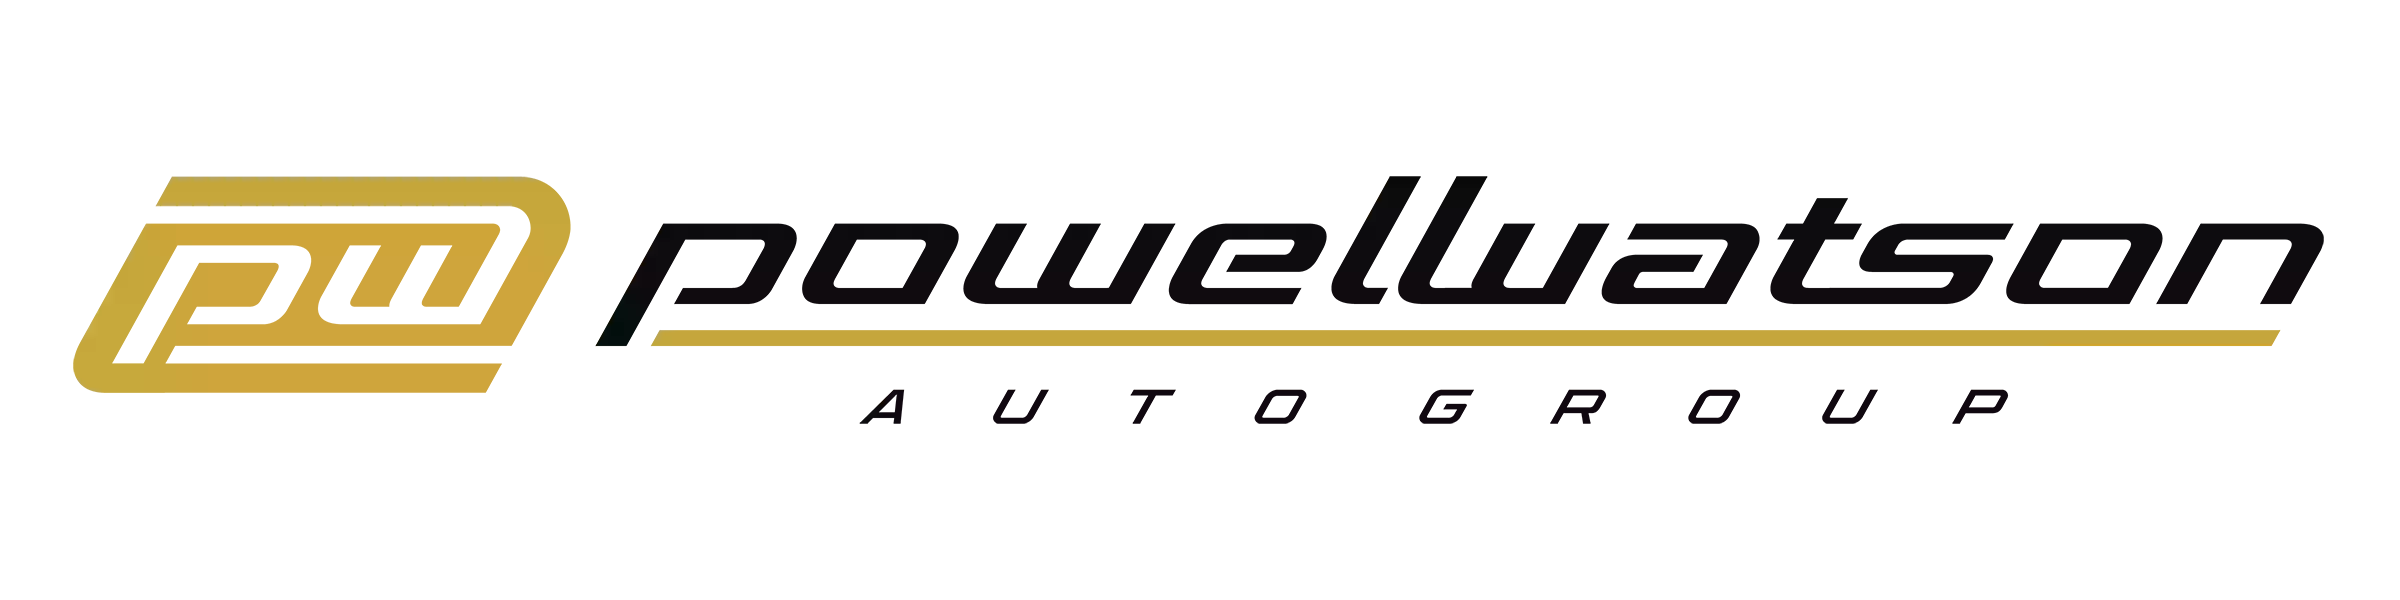 Powell Watson Motors Service Center